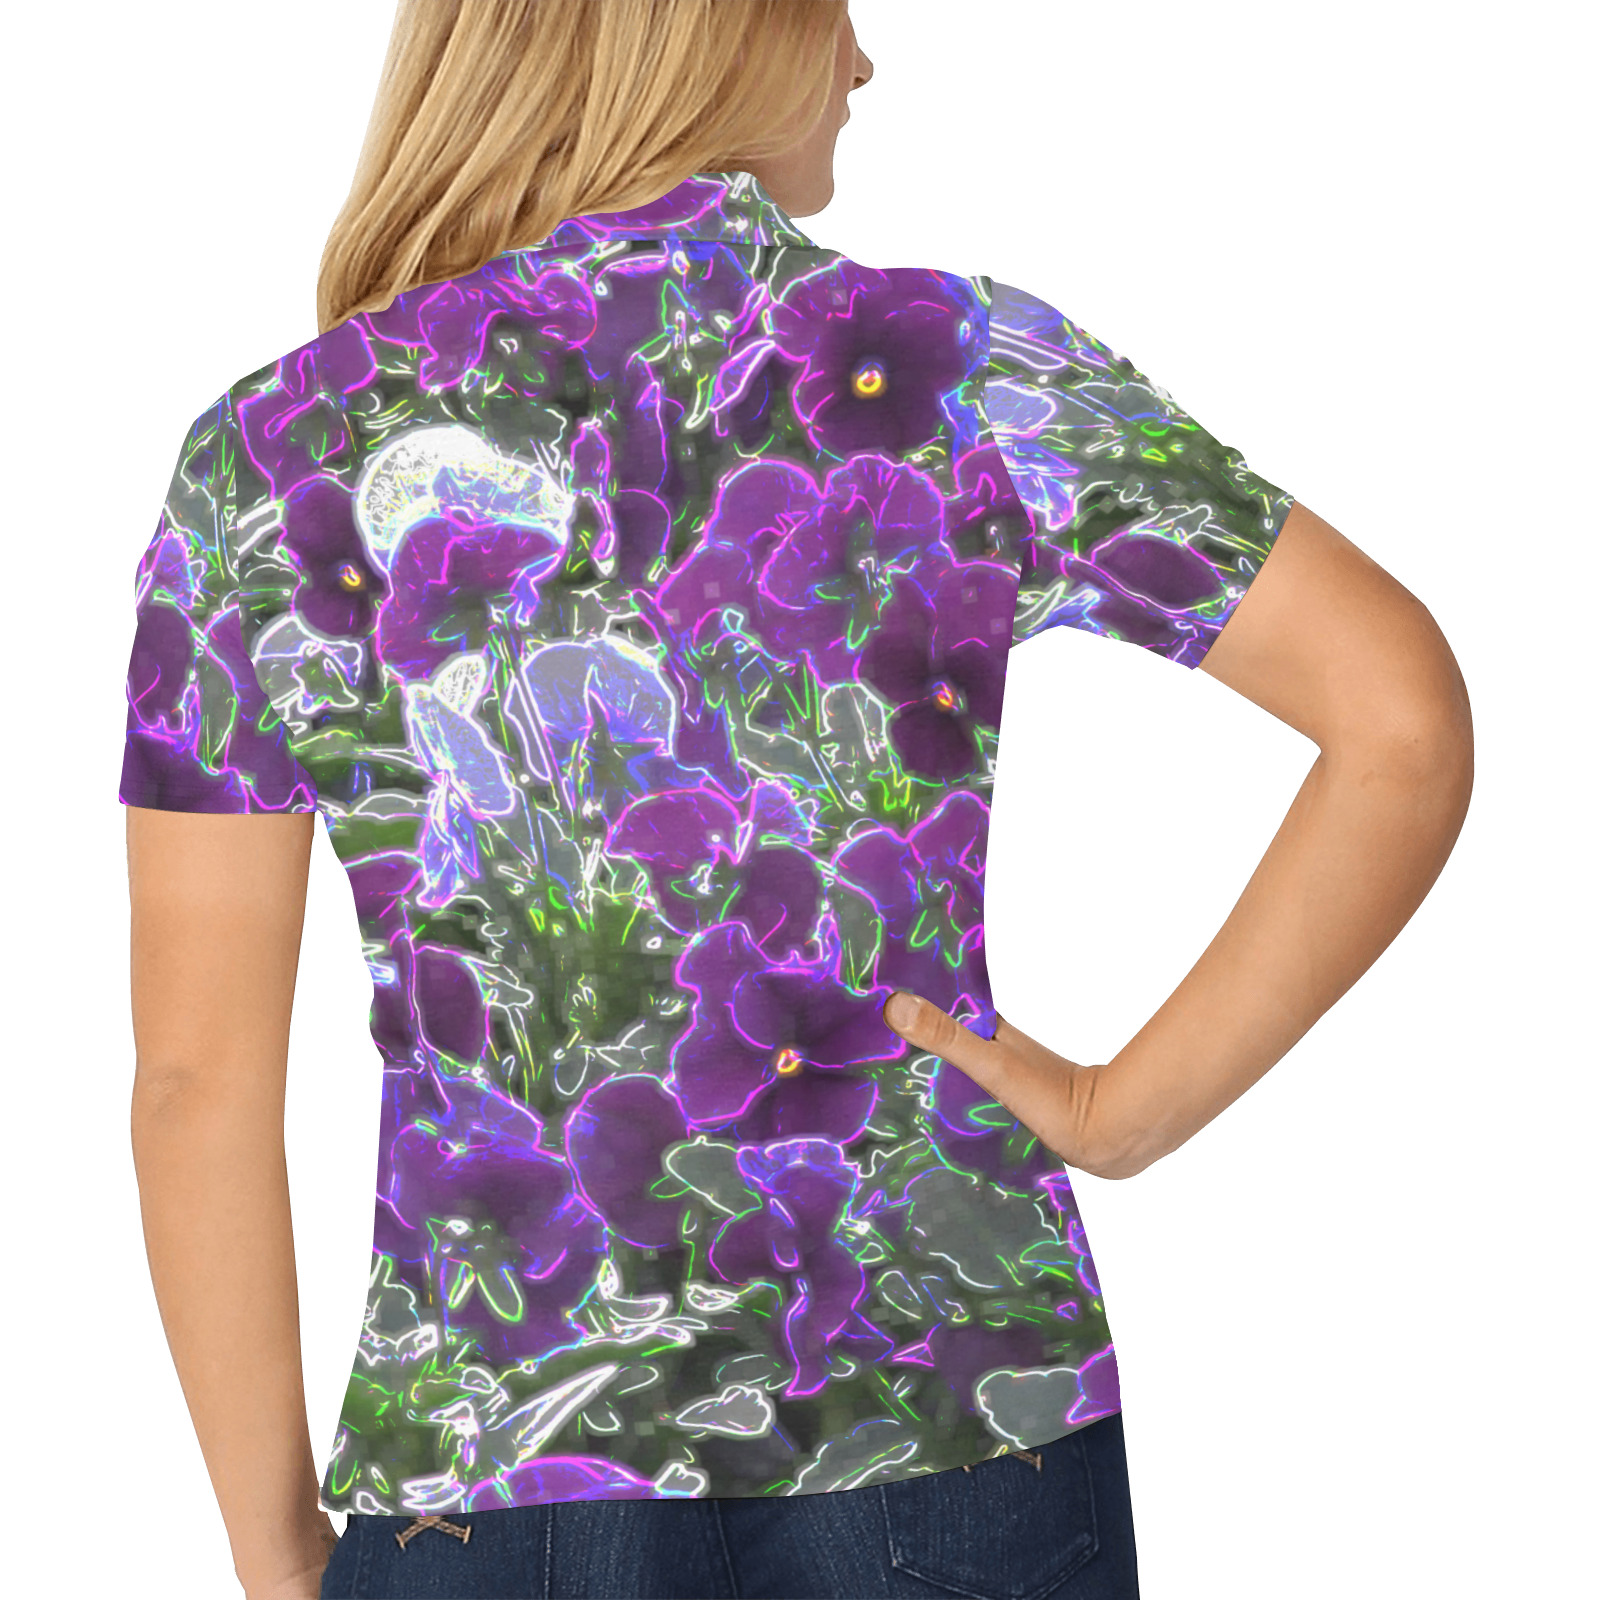 Field Of Purple Flowers 8420 Women's All Over Print Polo Shirt (Model T55)